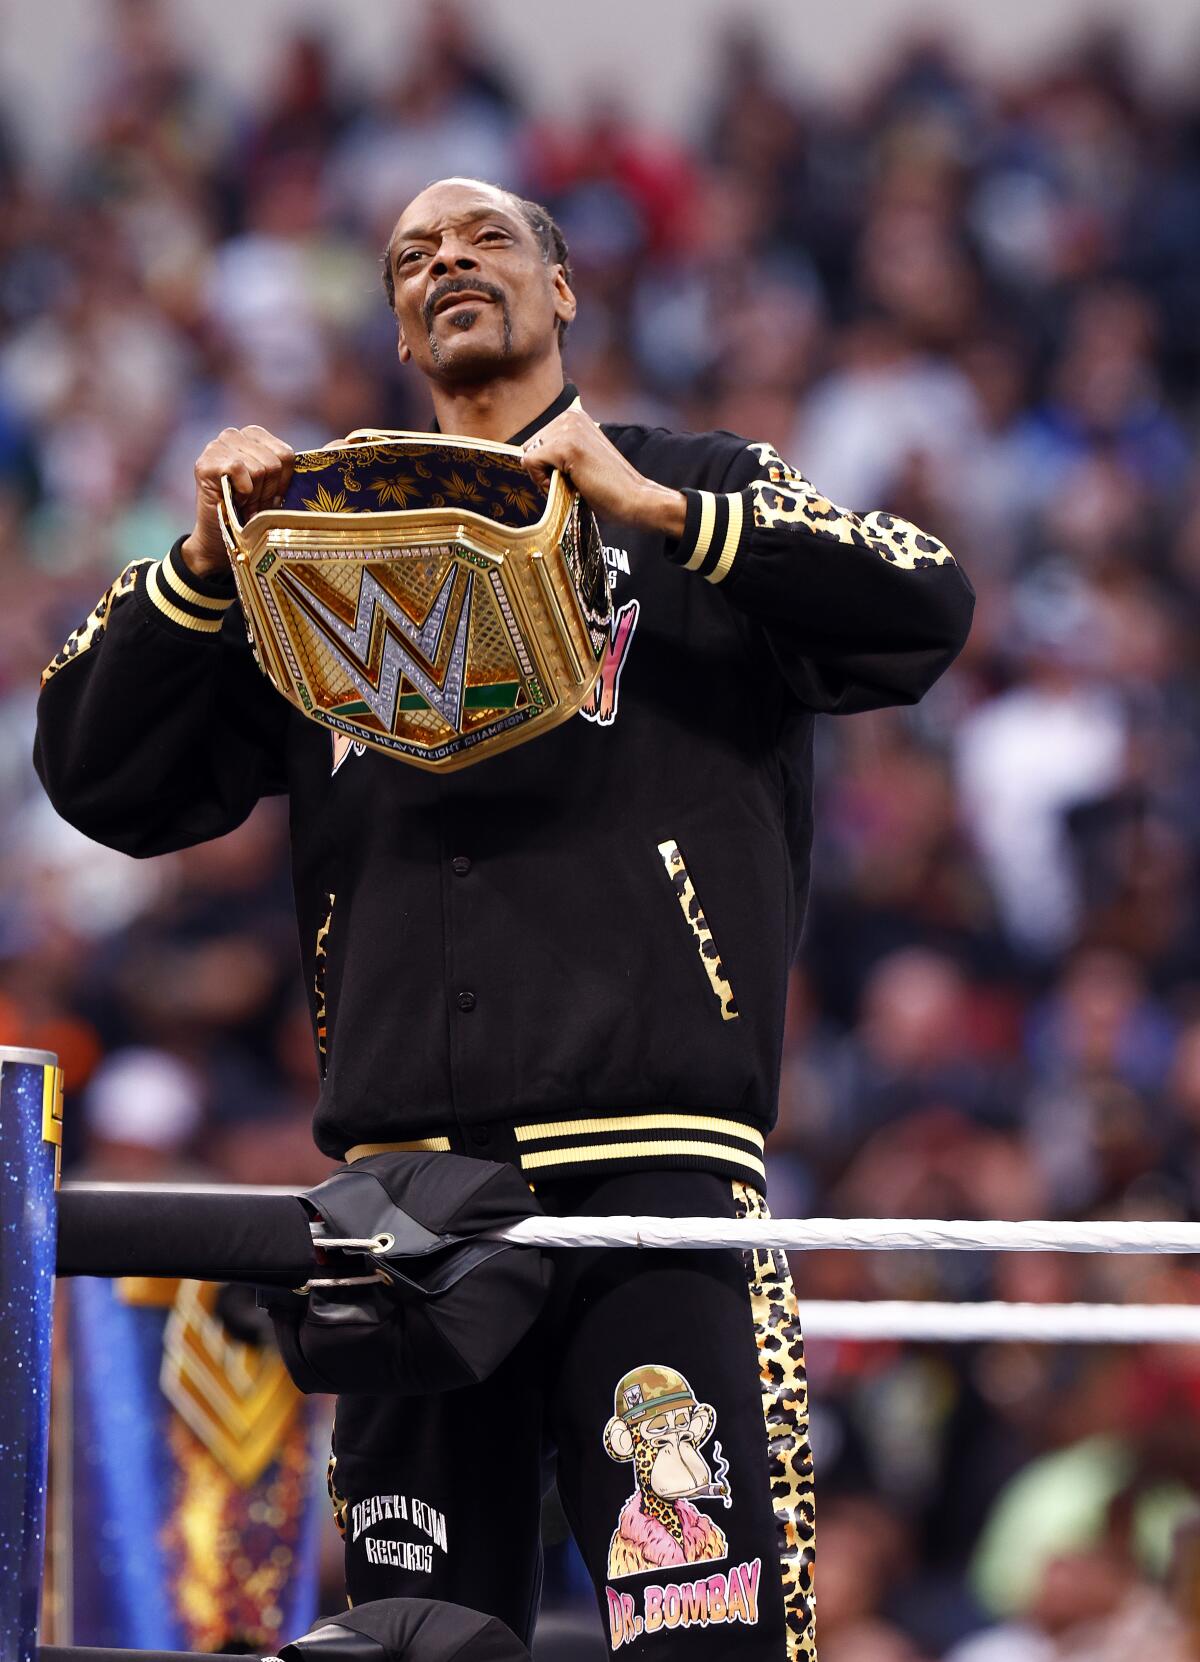 Snoop Dogg after beating up The Miz at WrestleMania following an apparent injury to Shane McMahon.